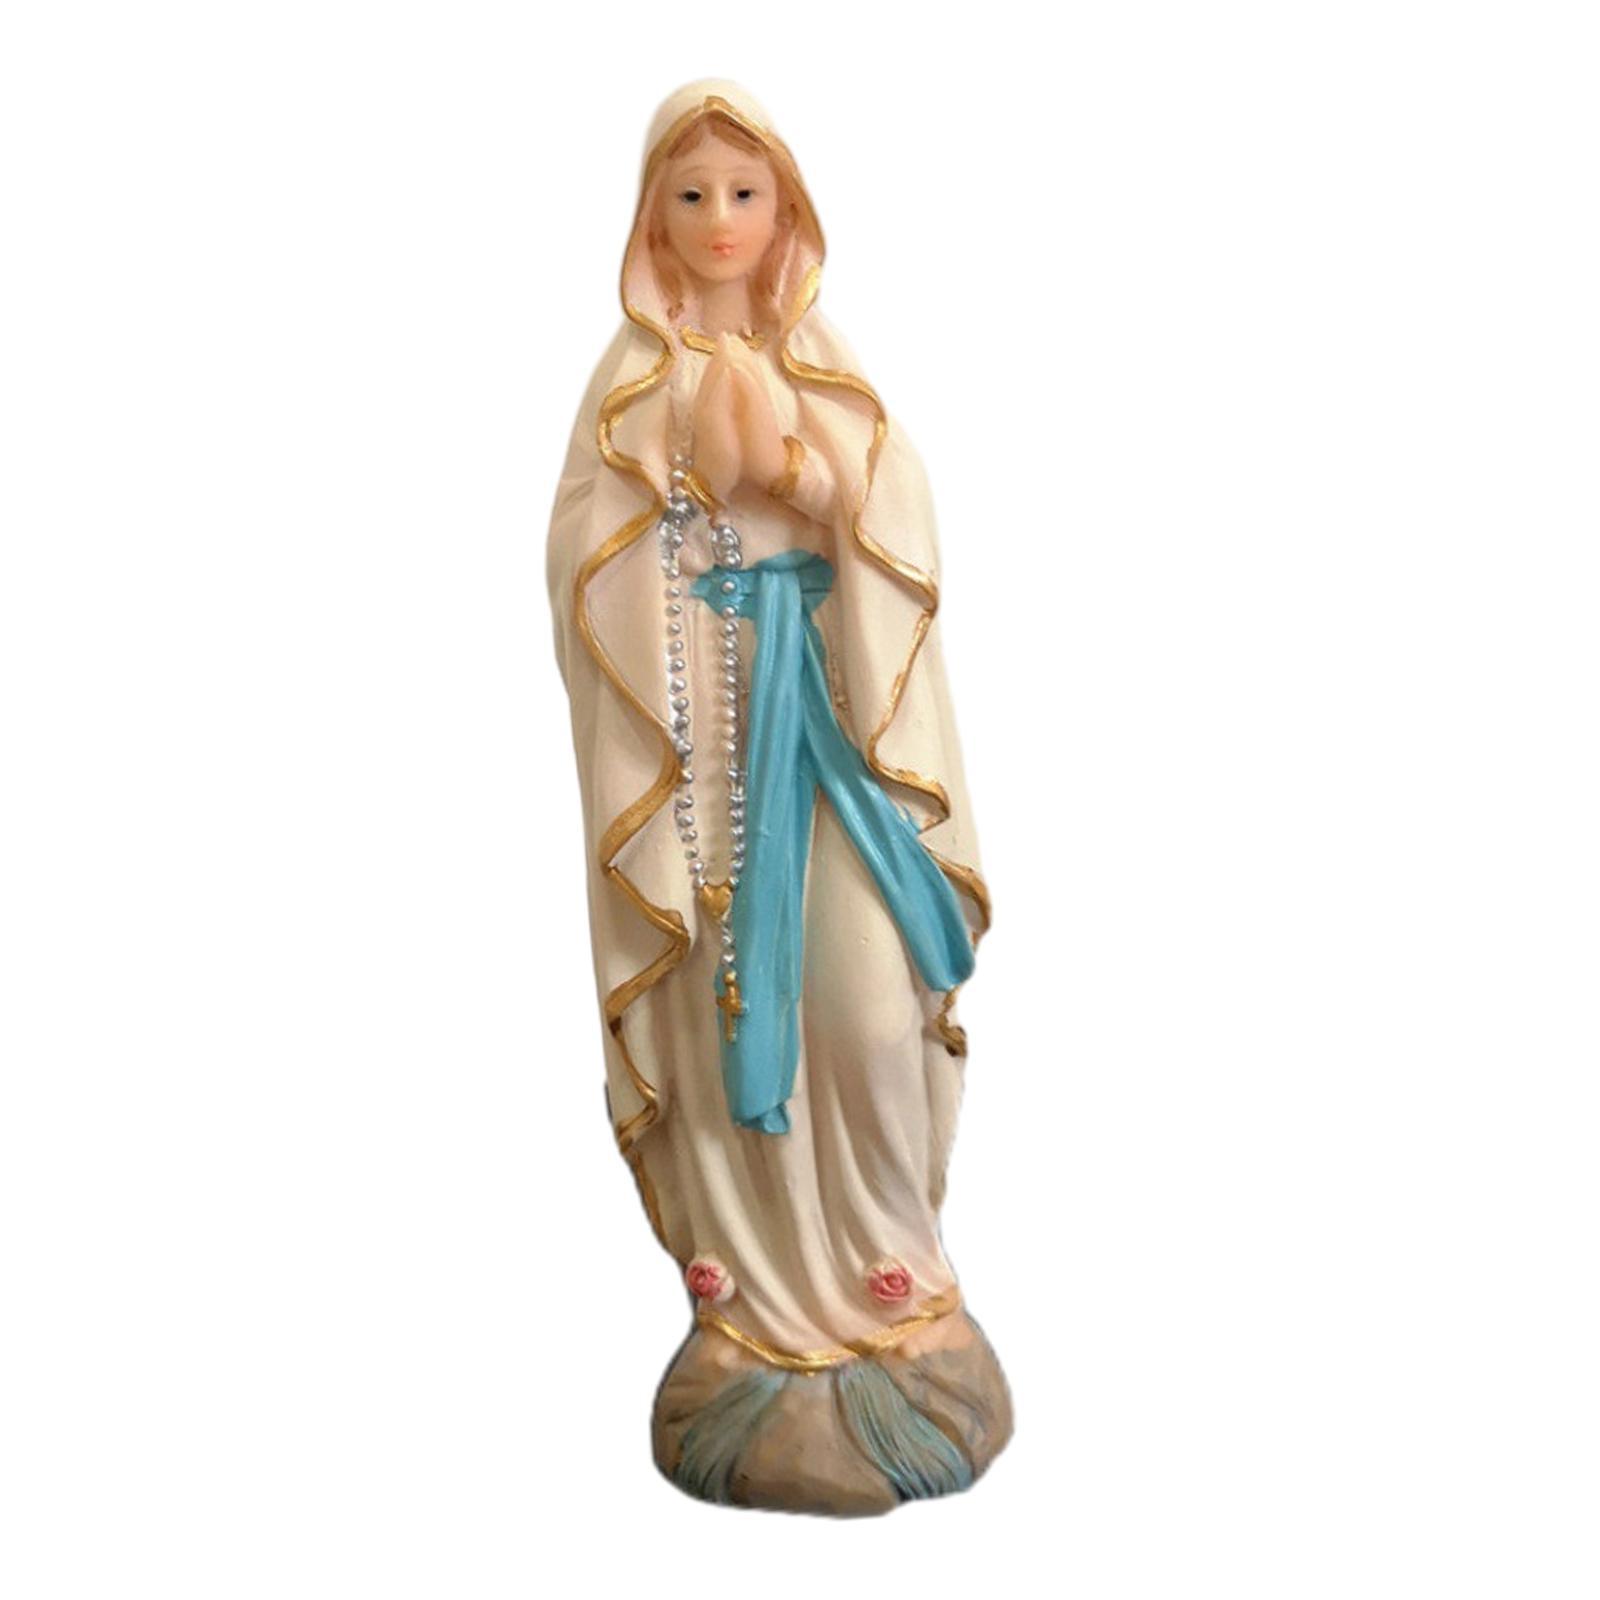 Mary Statue Crafts Decorative Religious Sculpture for Shelf Desk Home